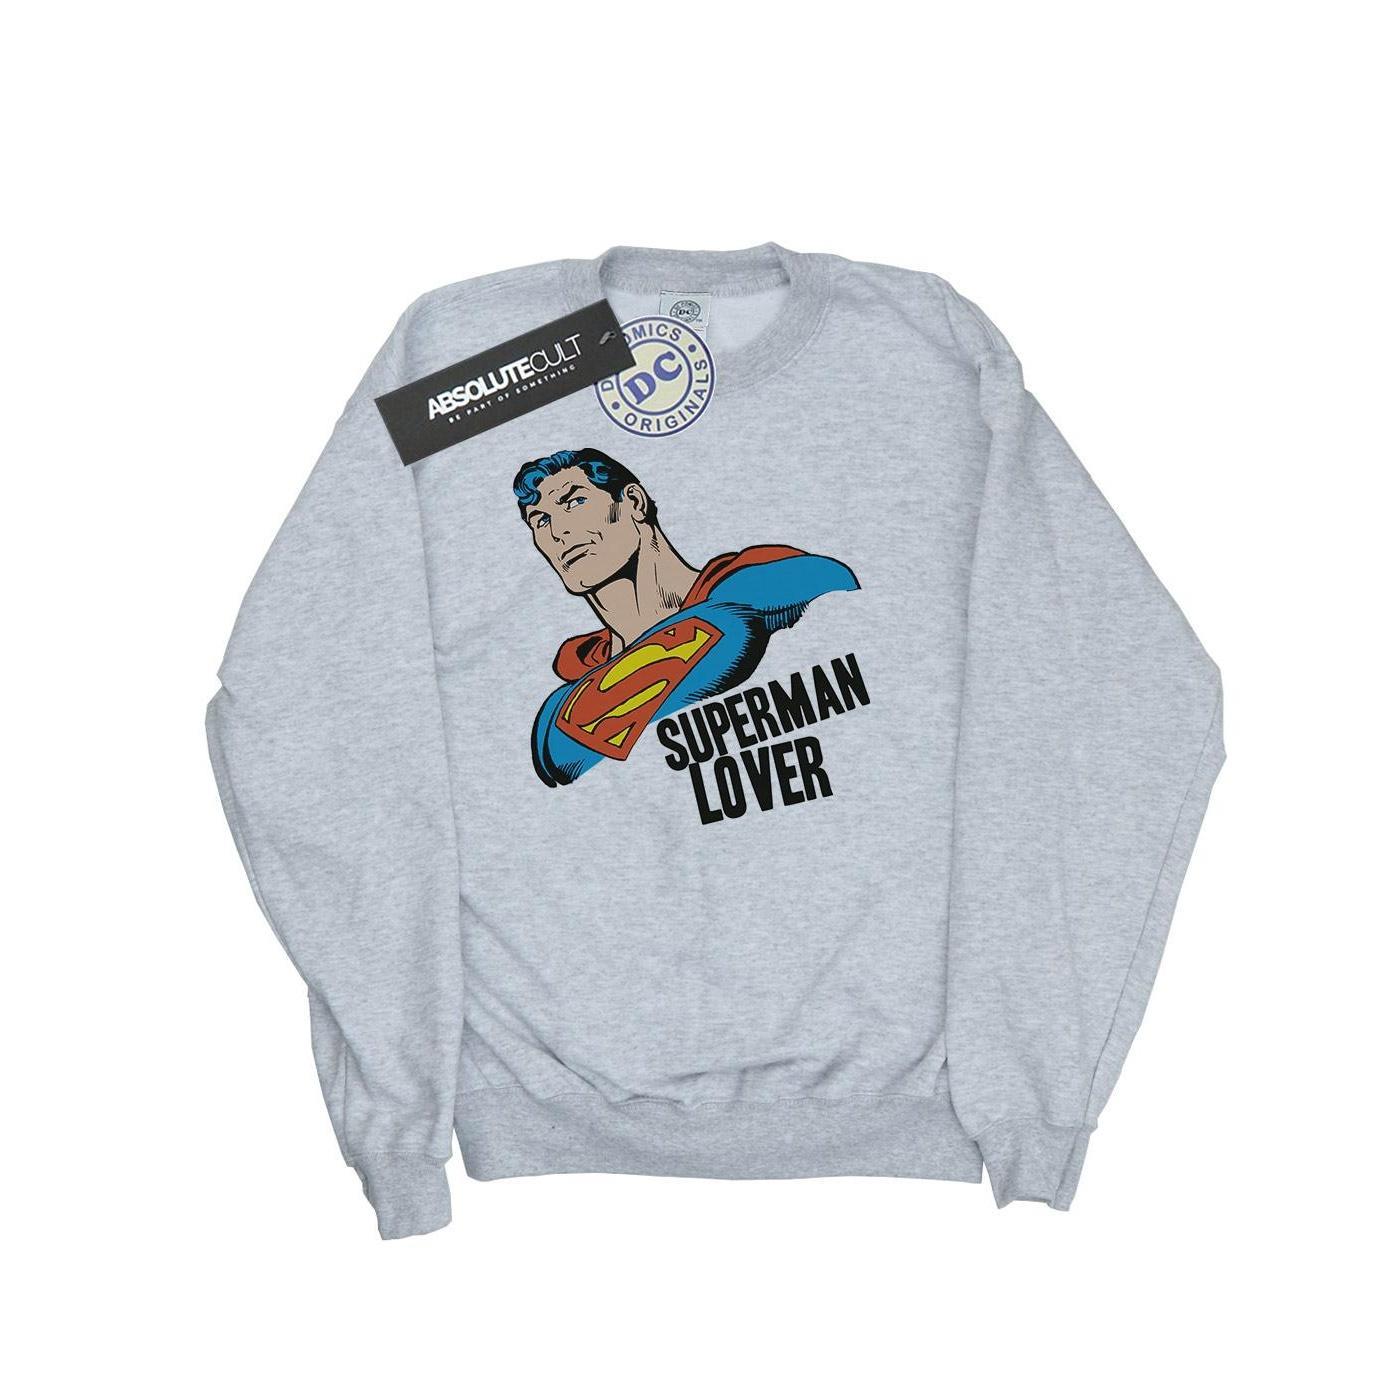 DC Comics Girls Superman Lover Sweatshirt (Sports Grey) (5-6 Years)